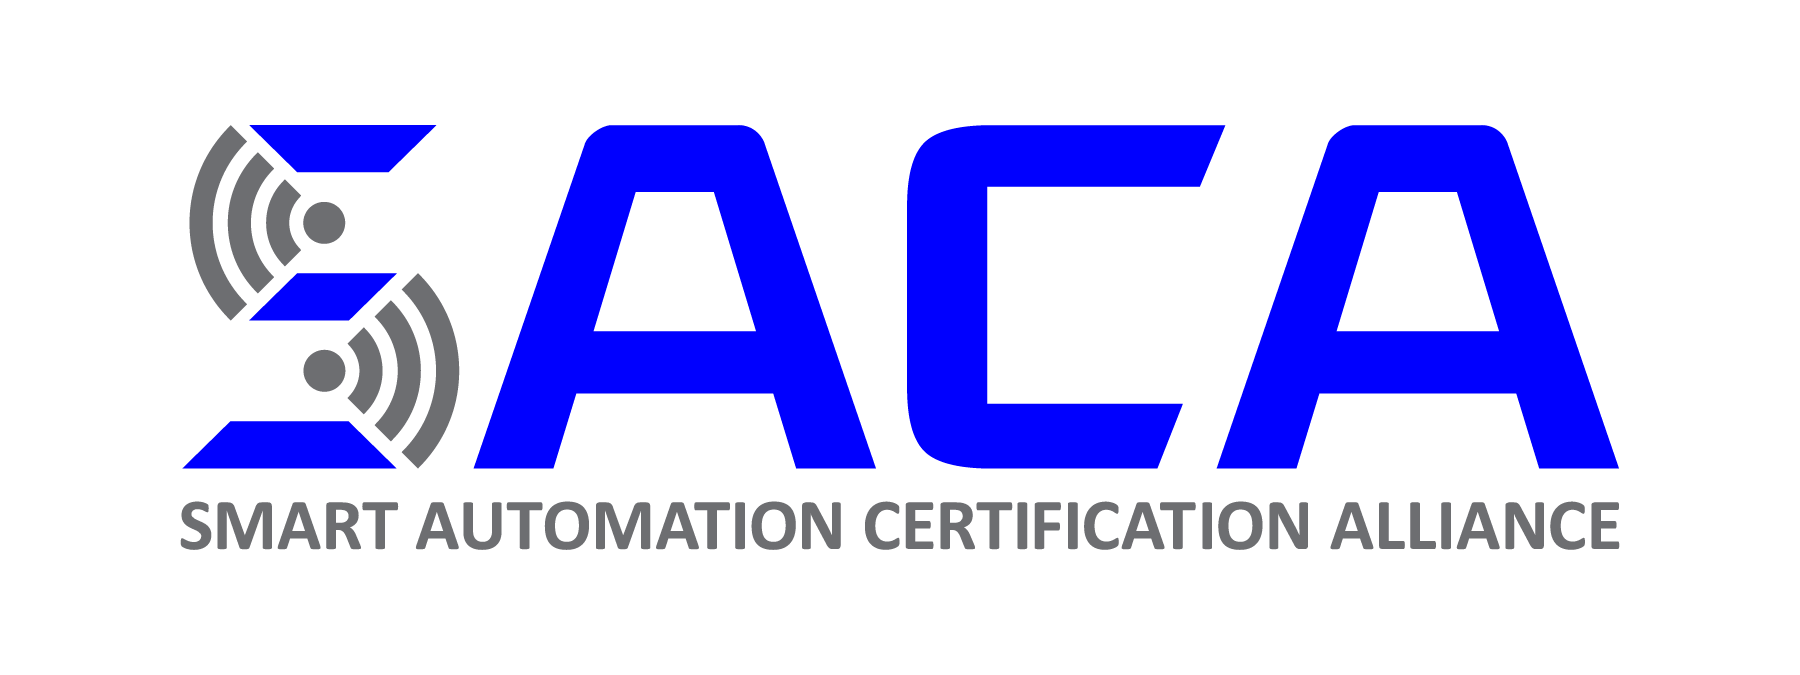 Smart Automation Certification Alliance Logo